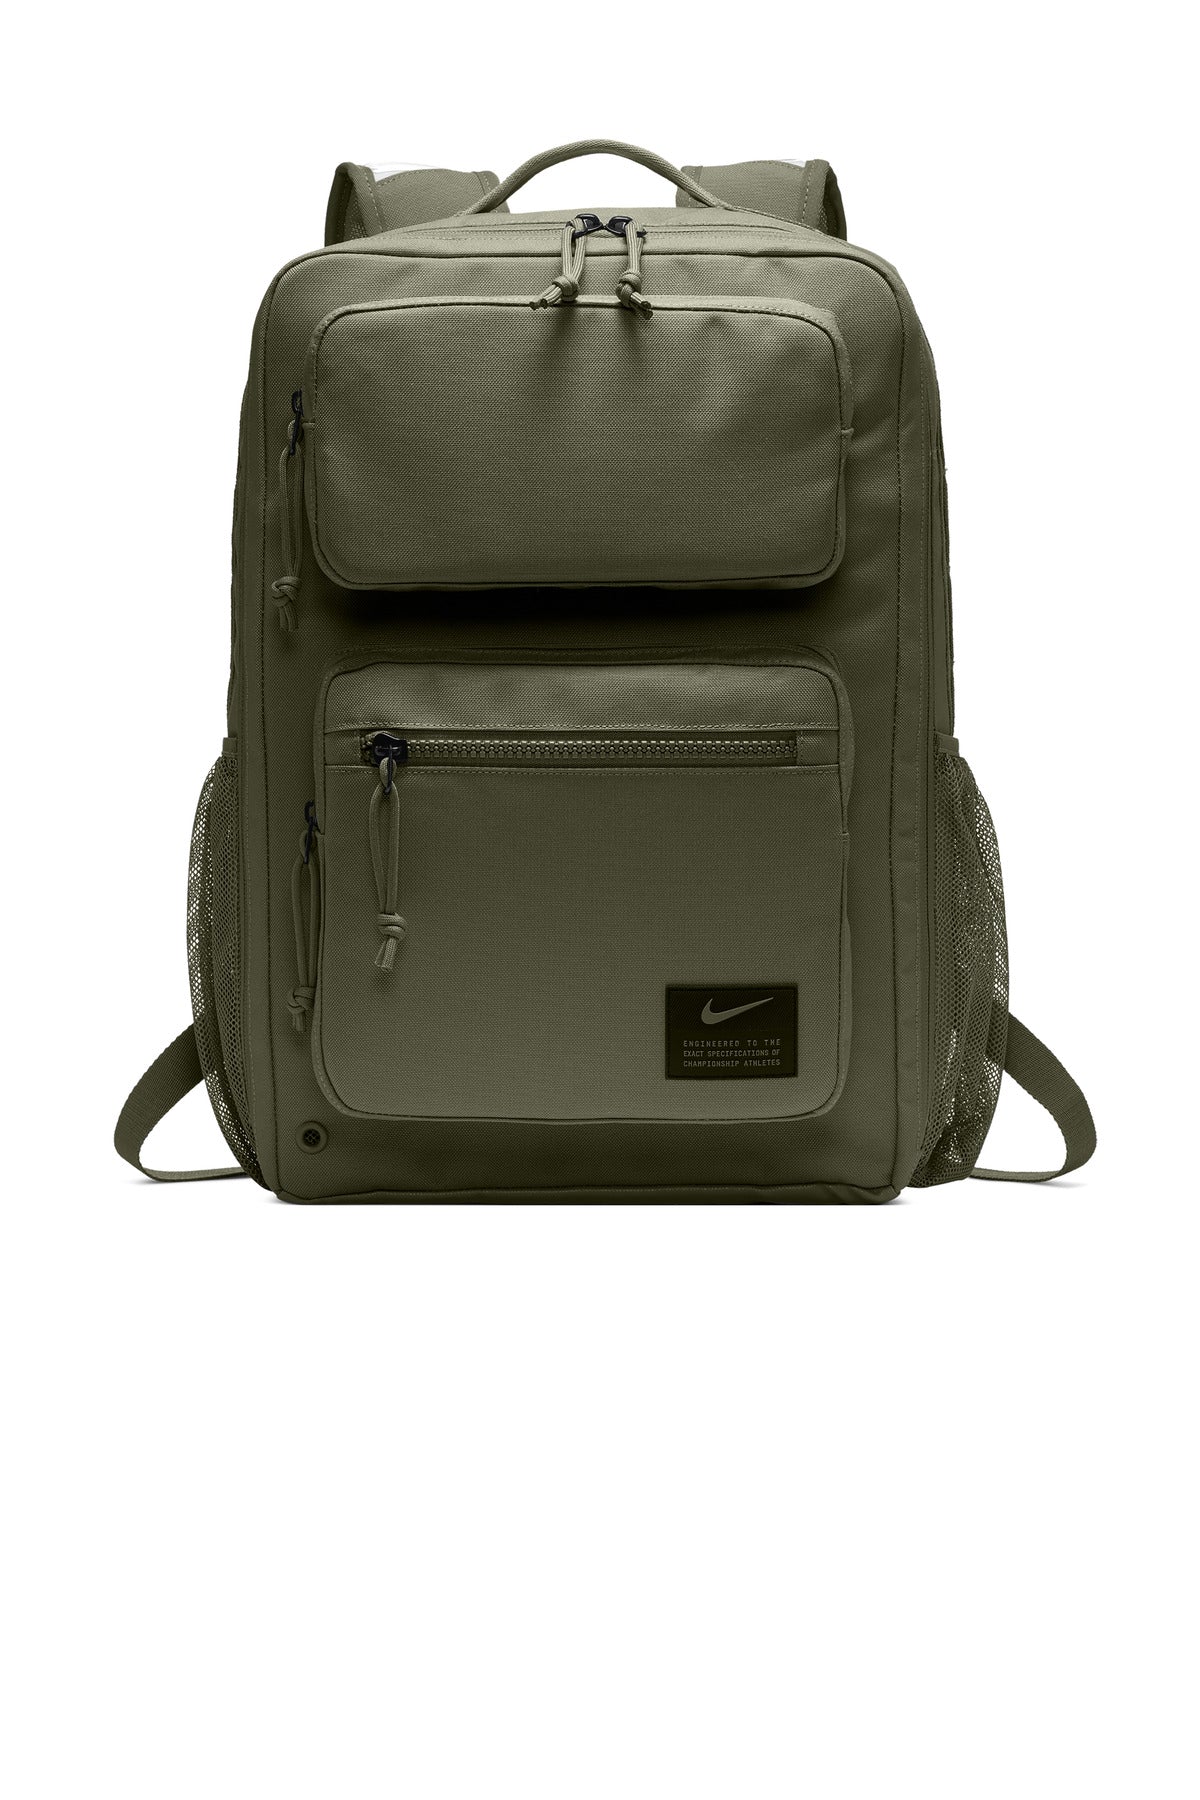 Bags Cargo Khaki OSFA Nike